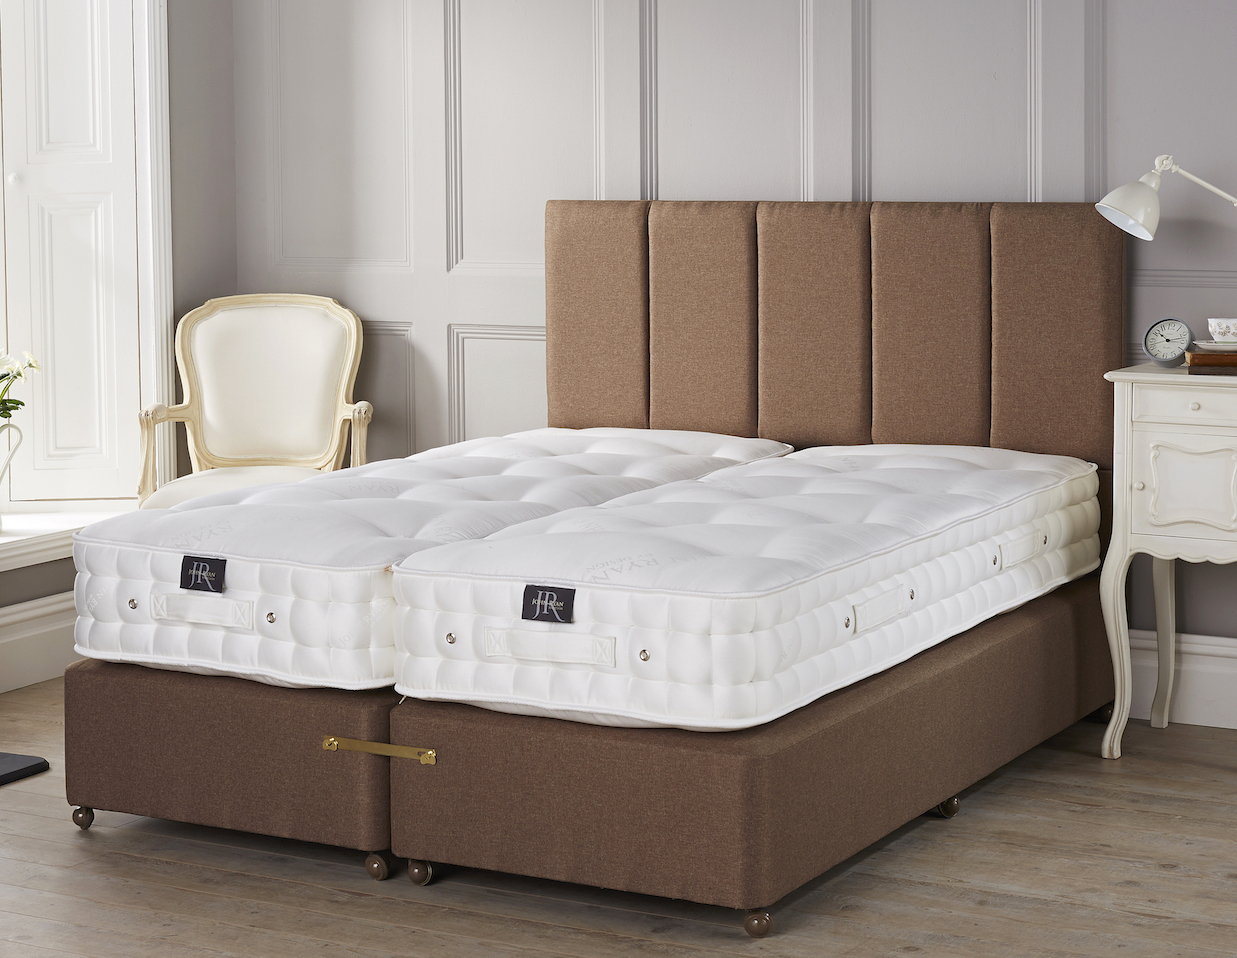 The Artisan Bespoke 004 zip together mattress